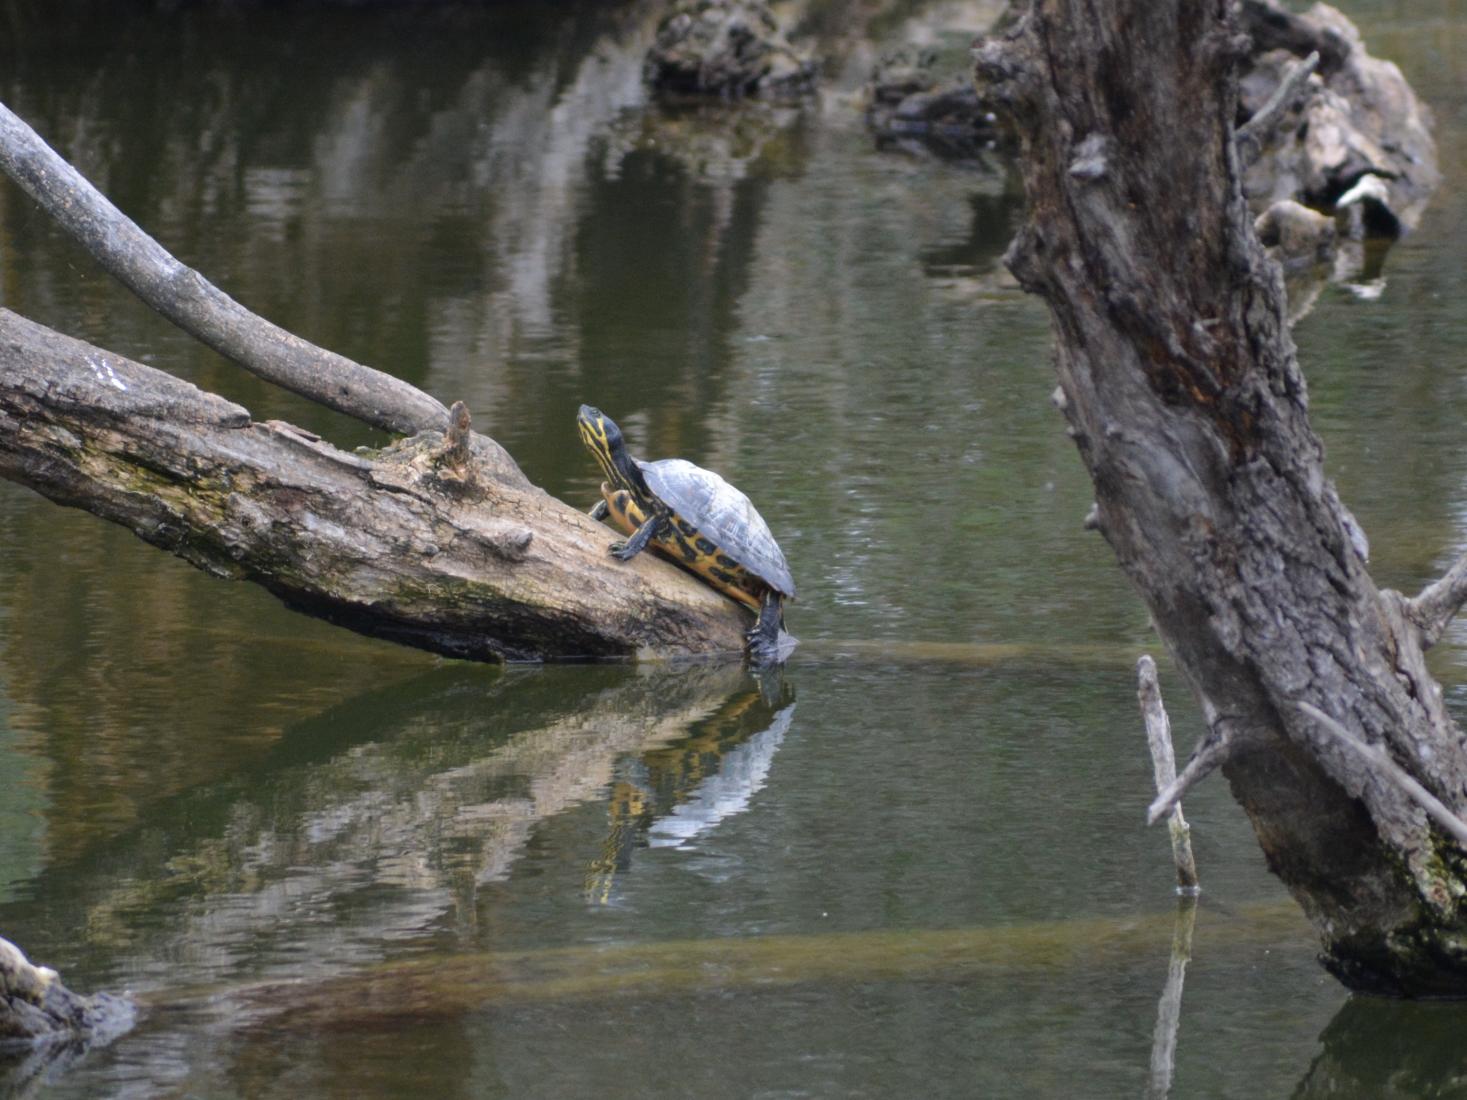 Gelbwangen-Schmuckschildkröte